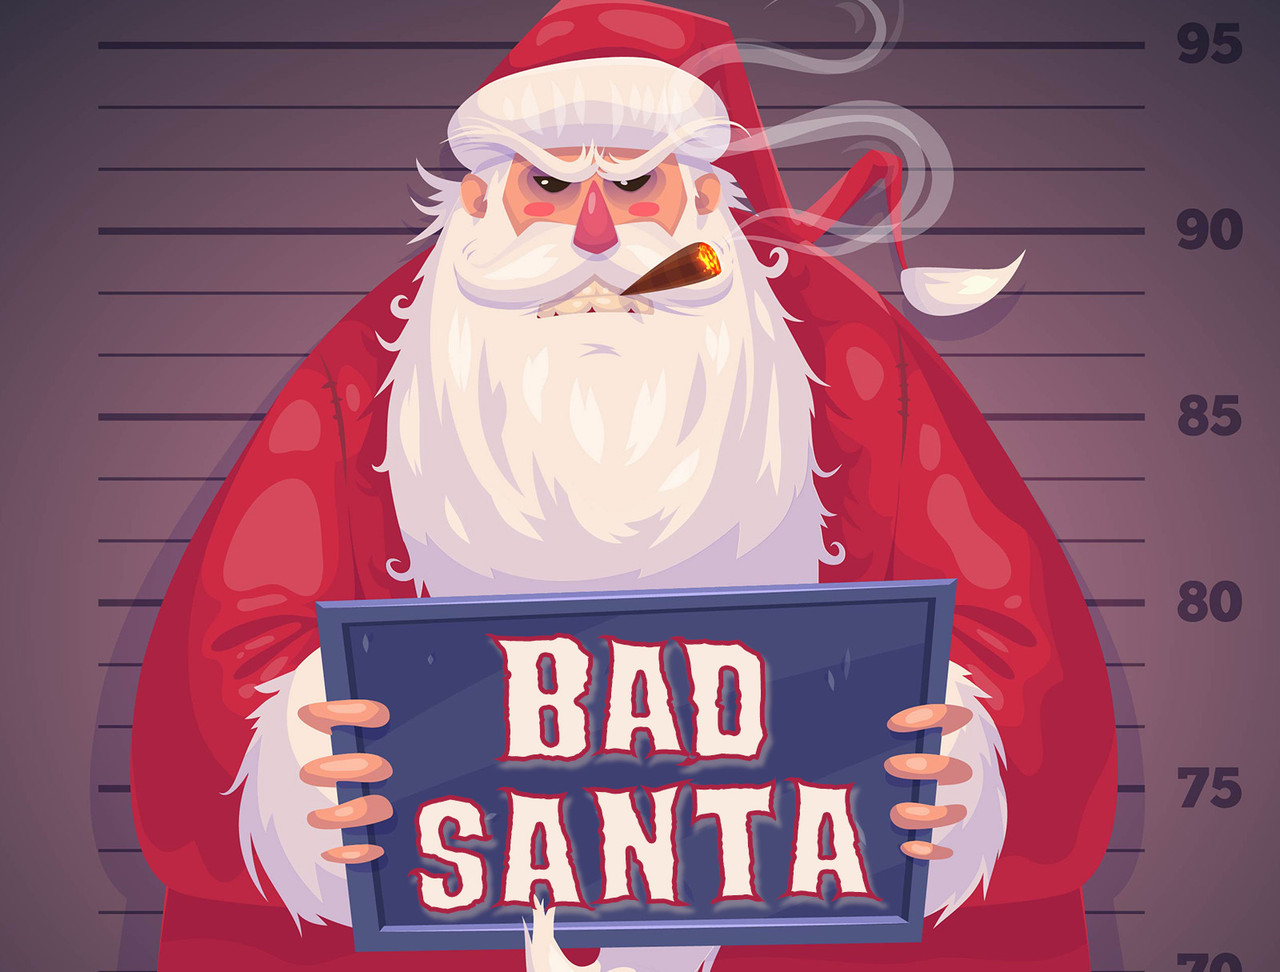 Bad Santa | A murder mystery game